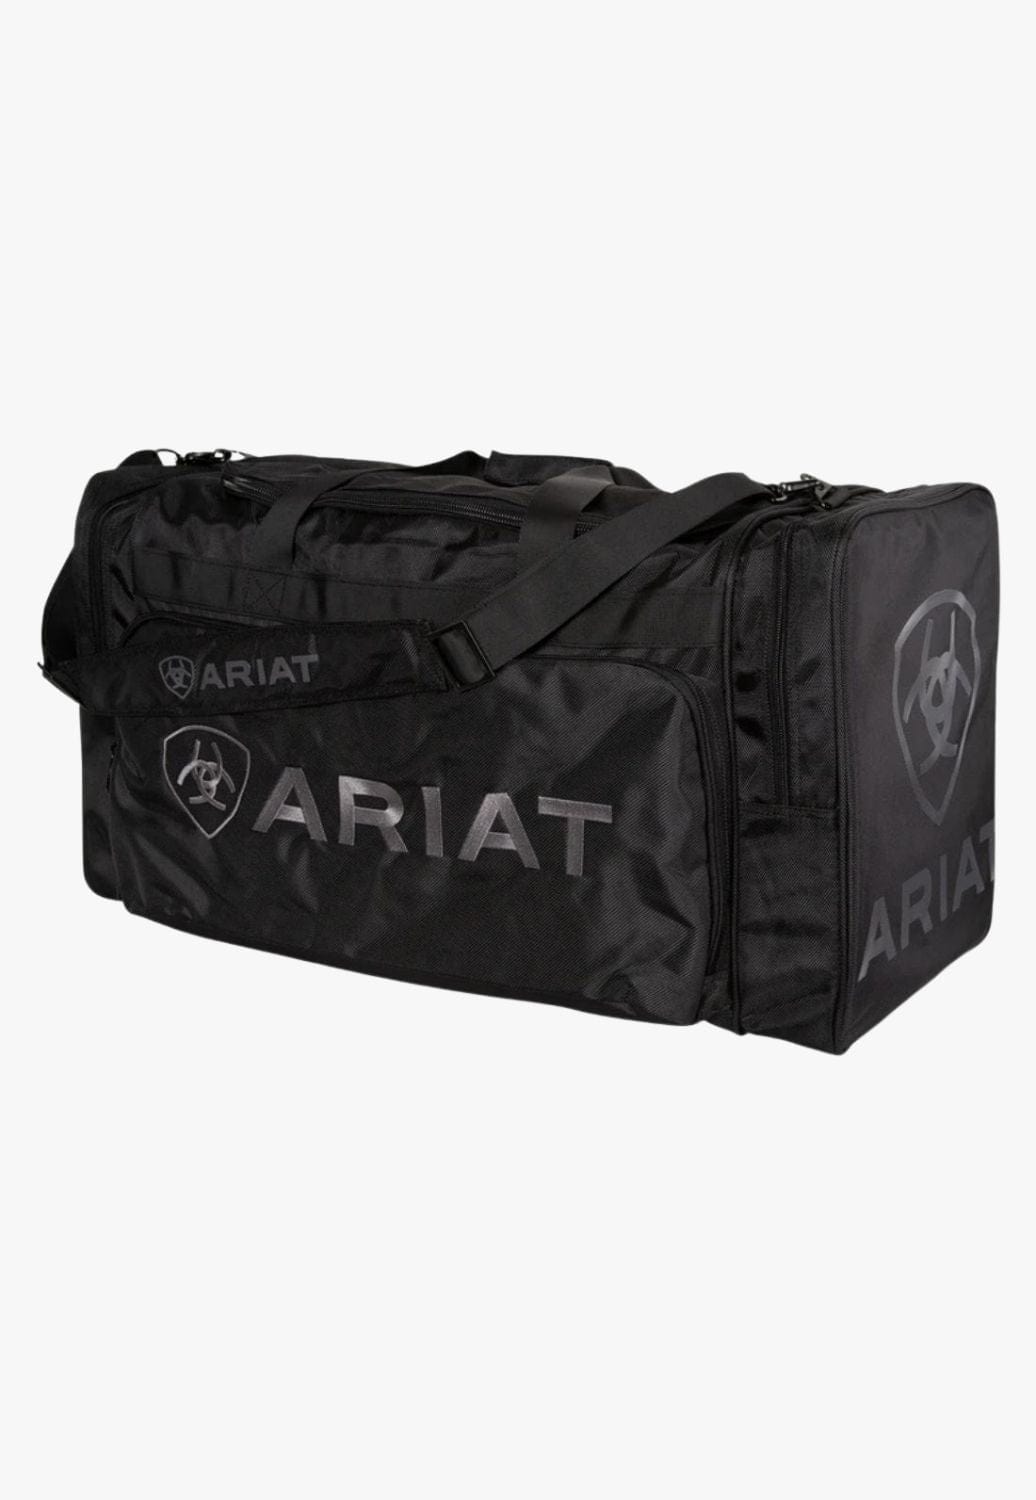 Ariat TRAVEL - Travel Bags Black Ariat Gear Bag